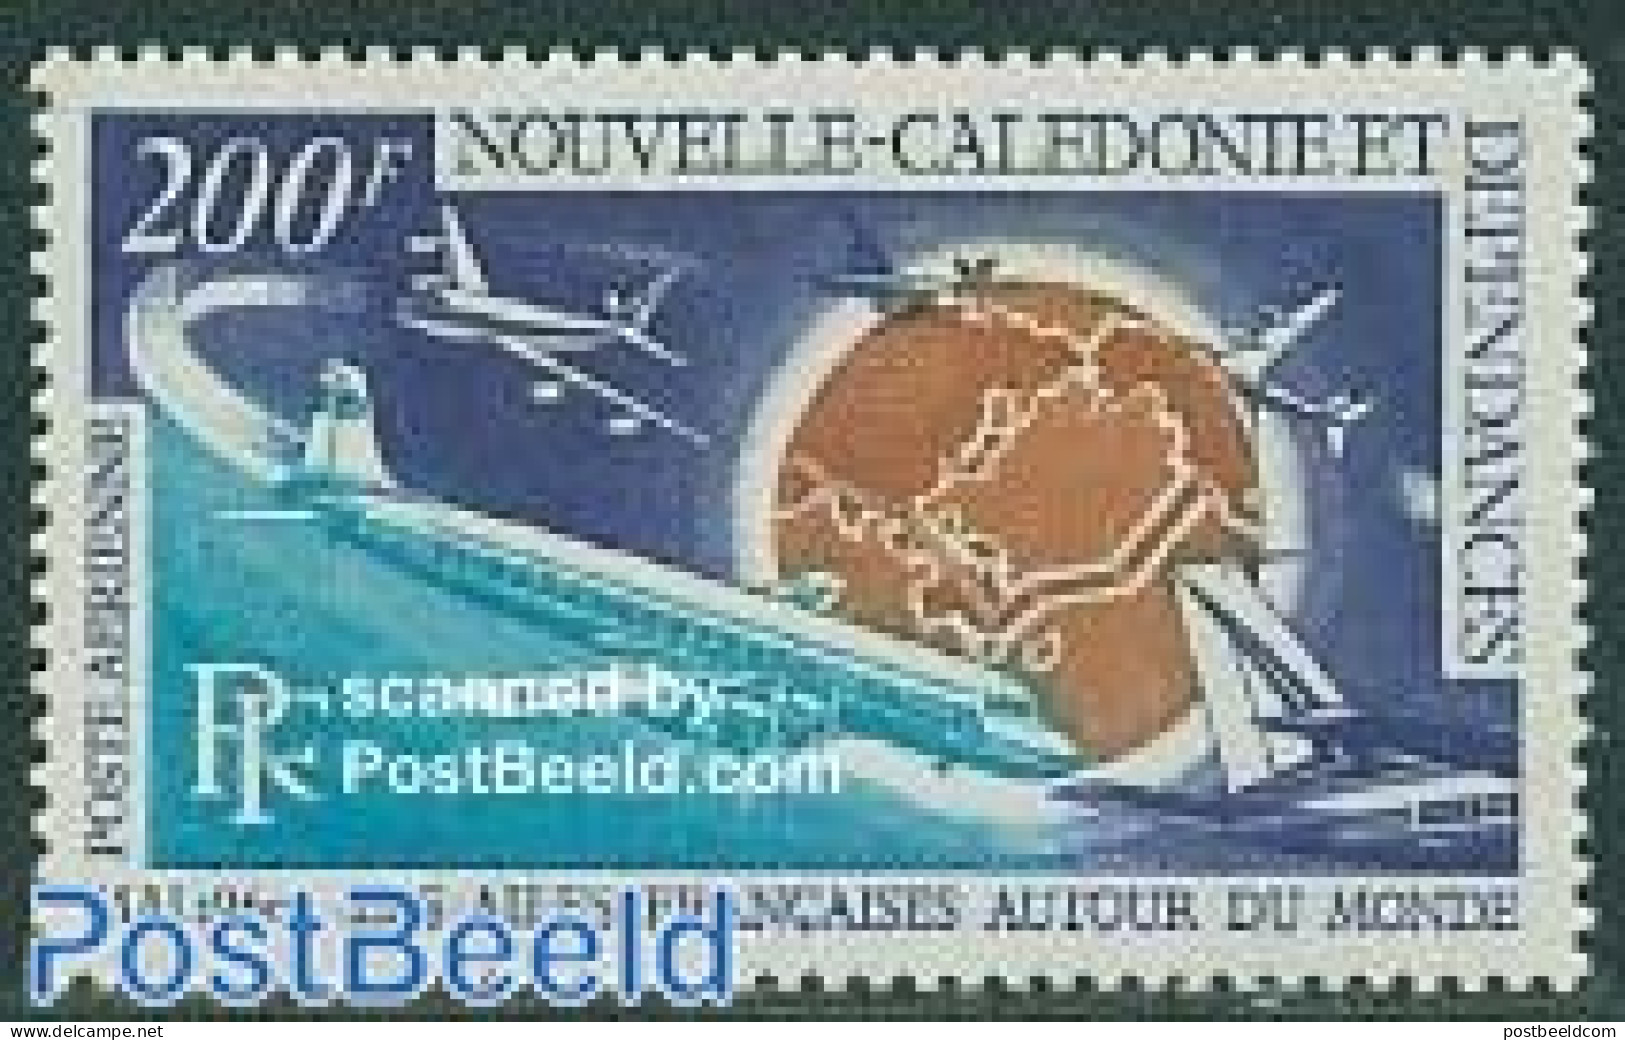 New Caledonia 1970 French Flights Around The World 1v, Mint NH, Transport - Aircraft & Aviation - Nuevos